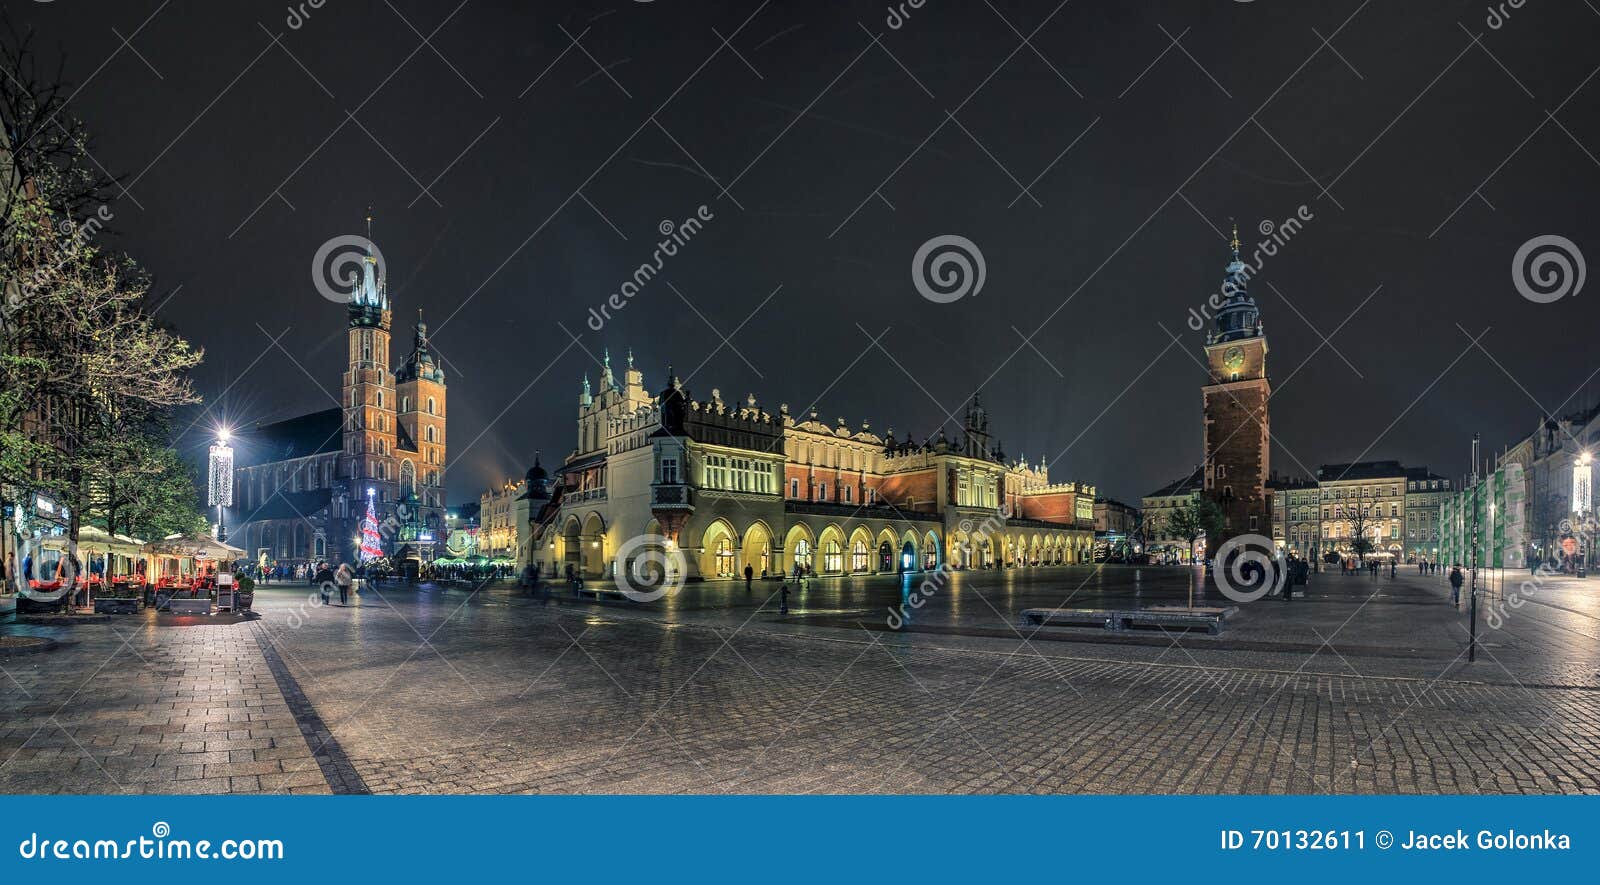 krakow main square